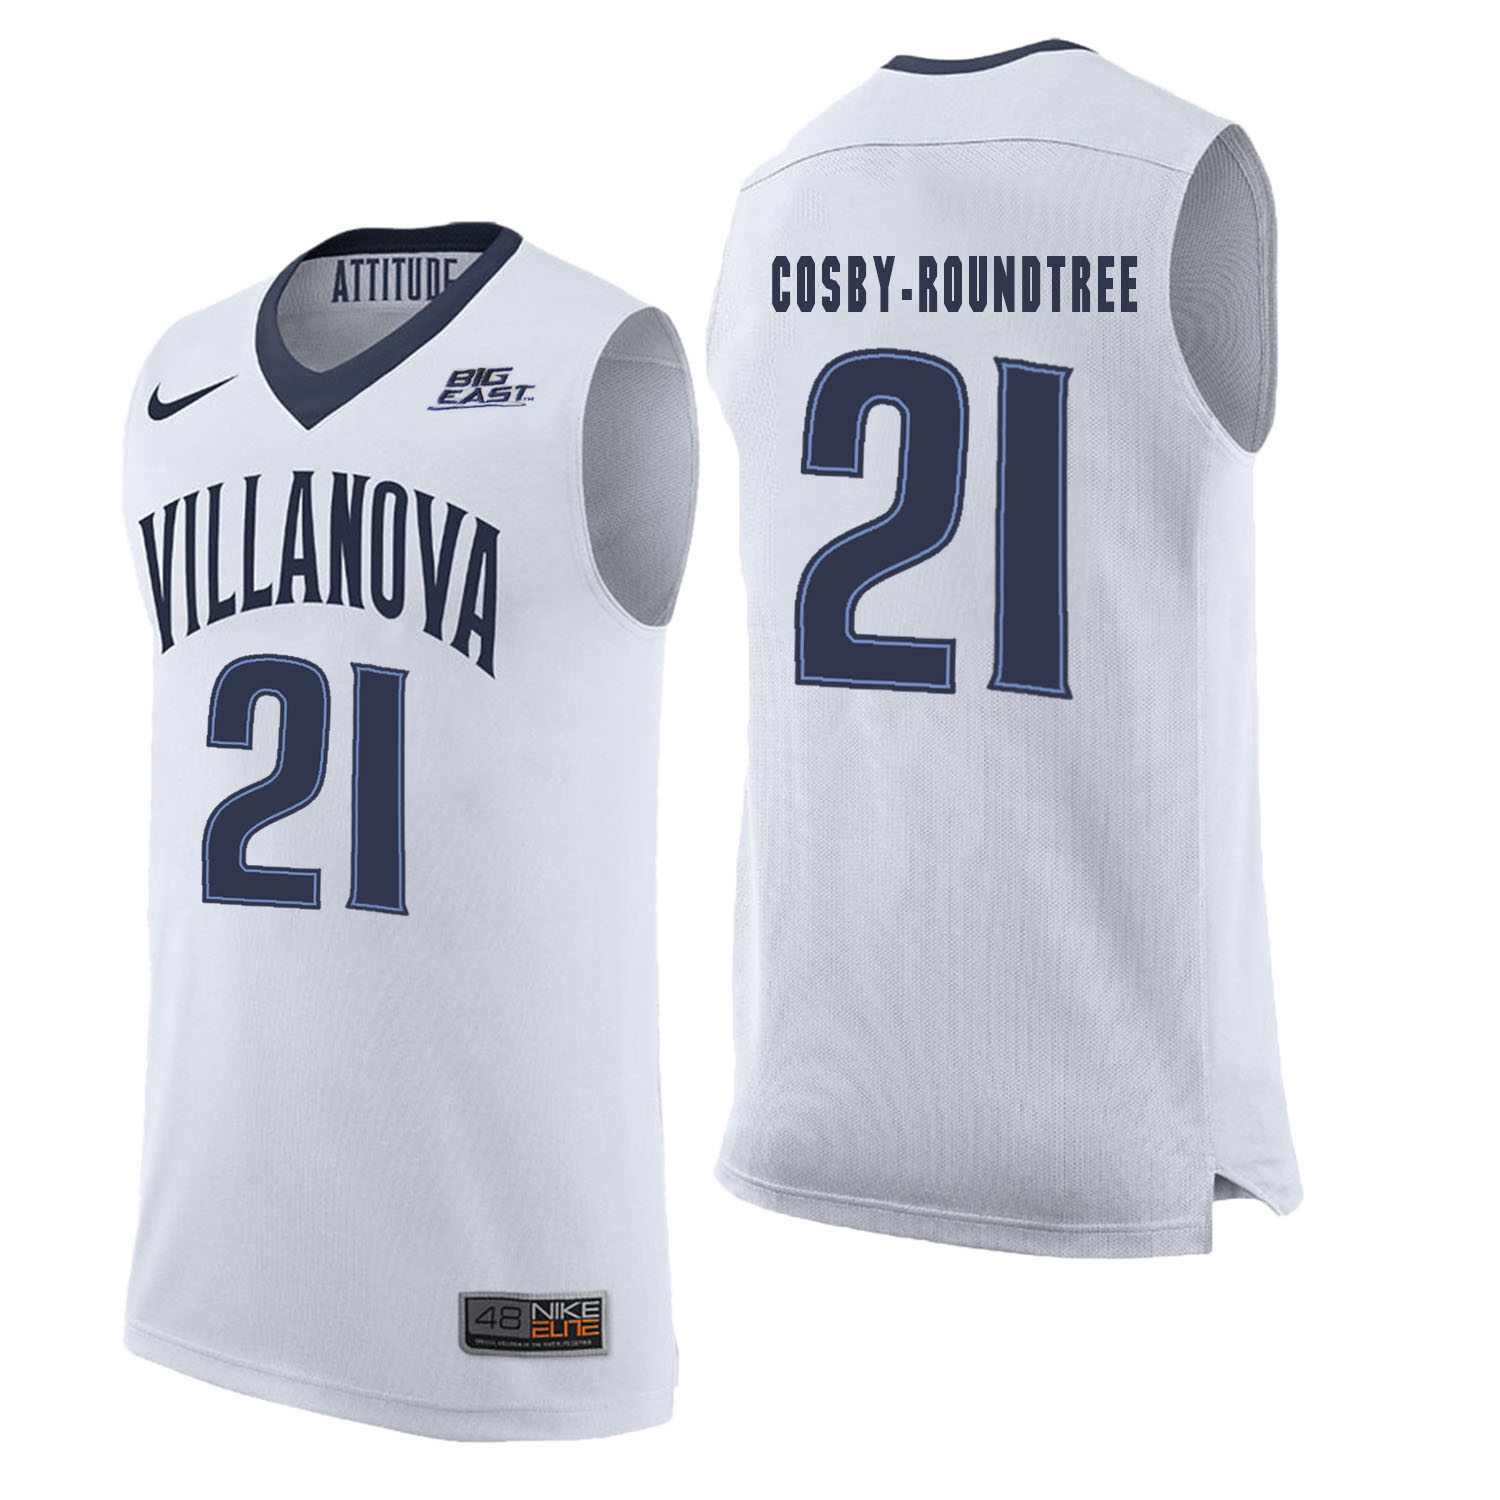 Villanova 21 Wildcats Dhamir Cosby-Roundtree White College Basketball Elite Jersey